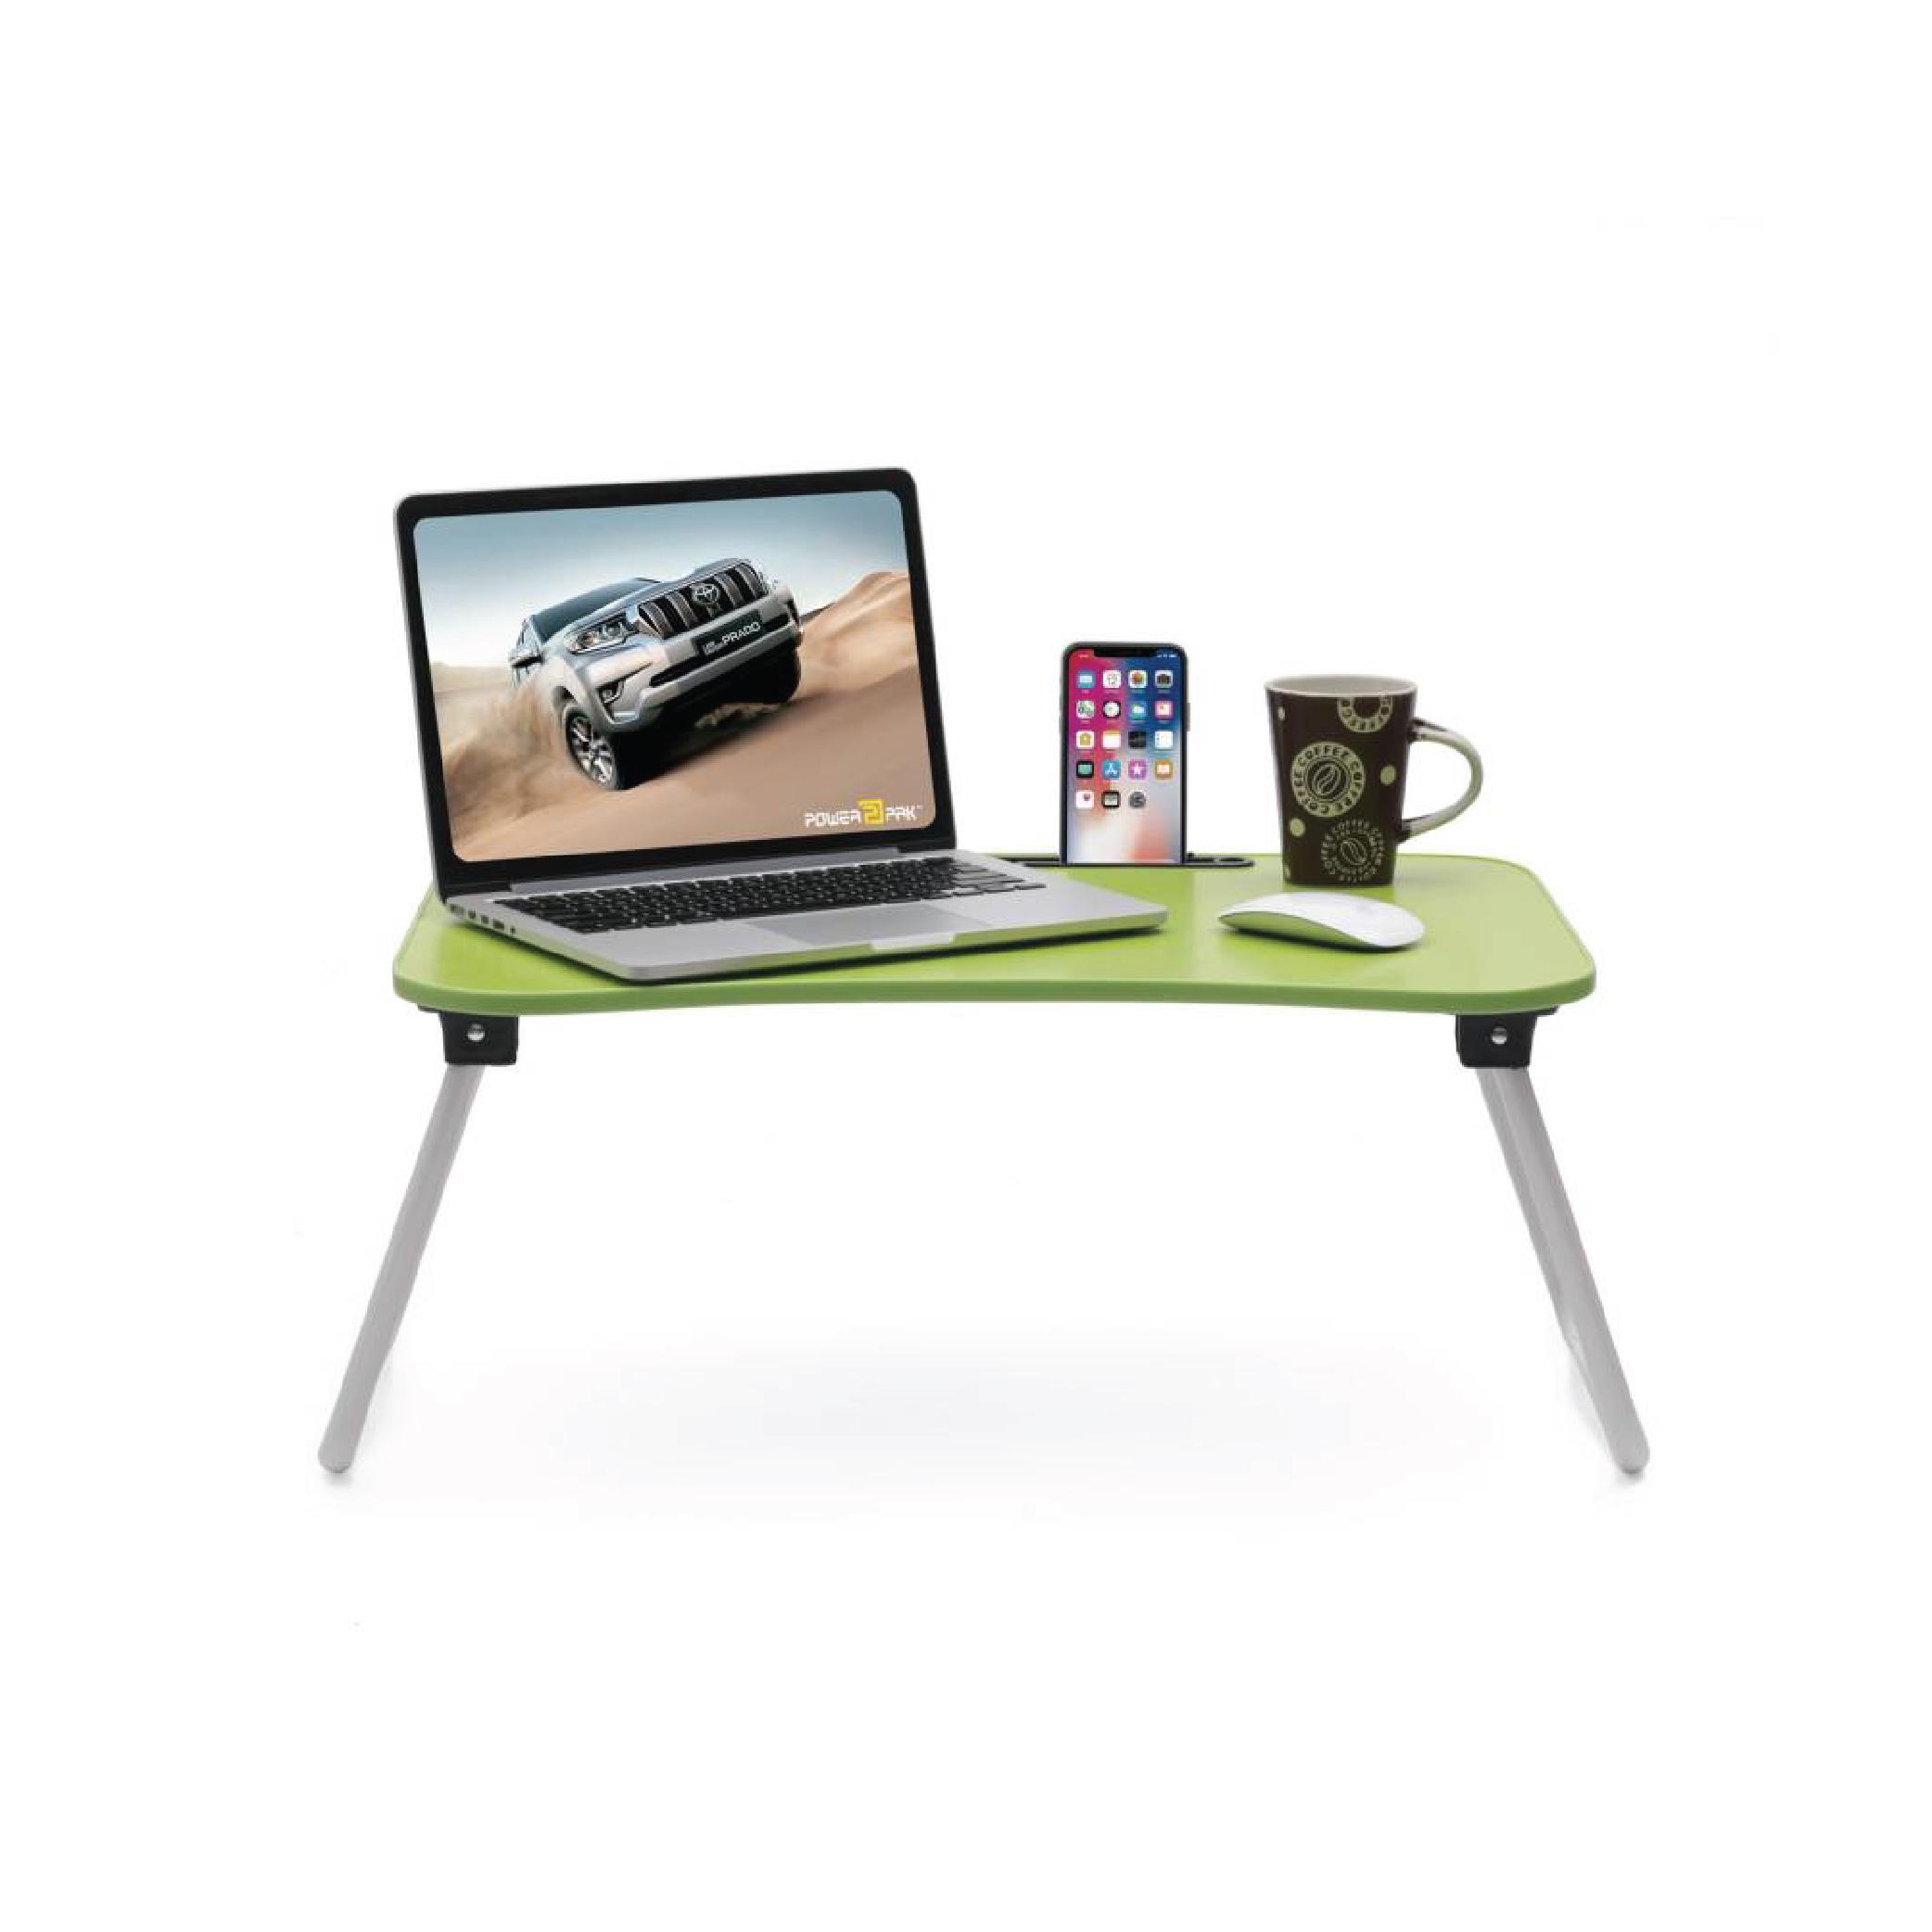 Calips Foldable Wood Portable Green Laptop Table